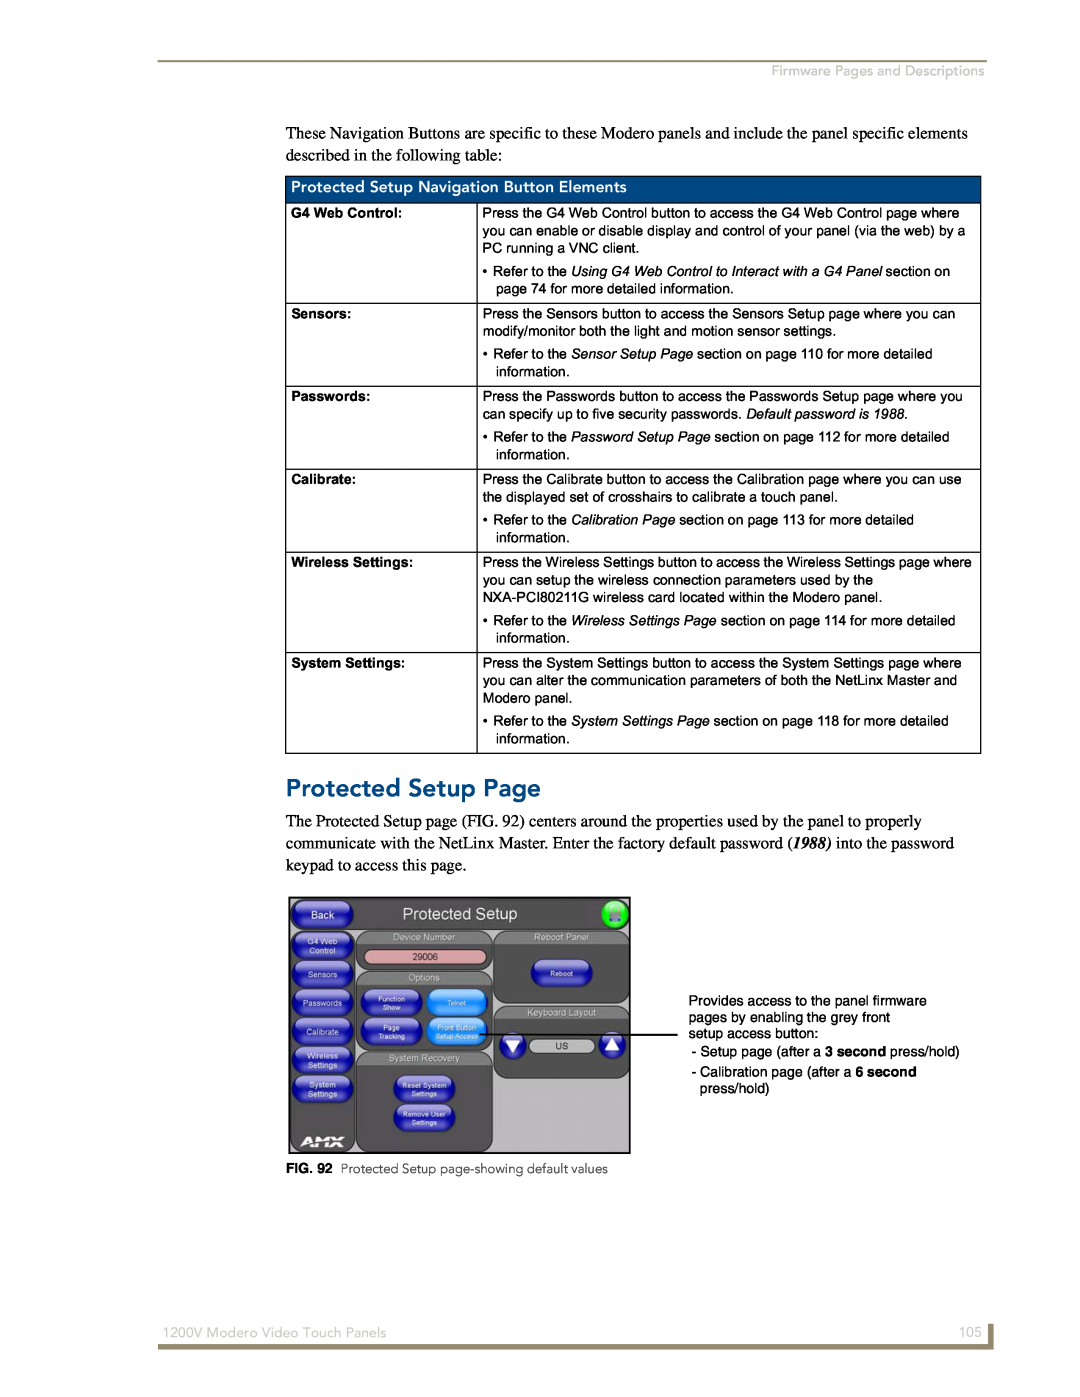 AMX NXT-1200V manual Protected Setup Page, Protected Setup Navigation Button Elements 